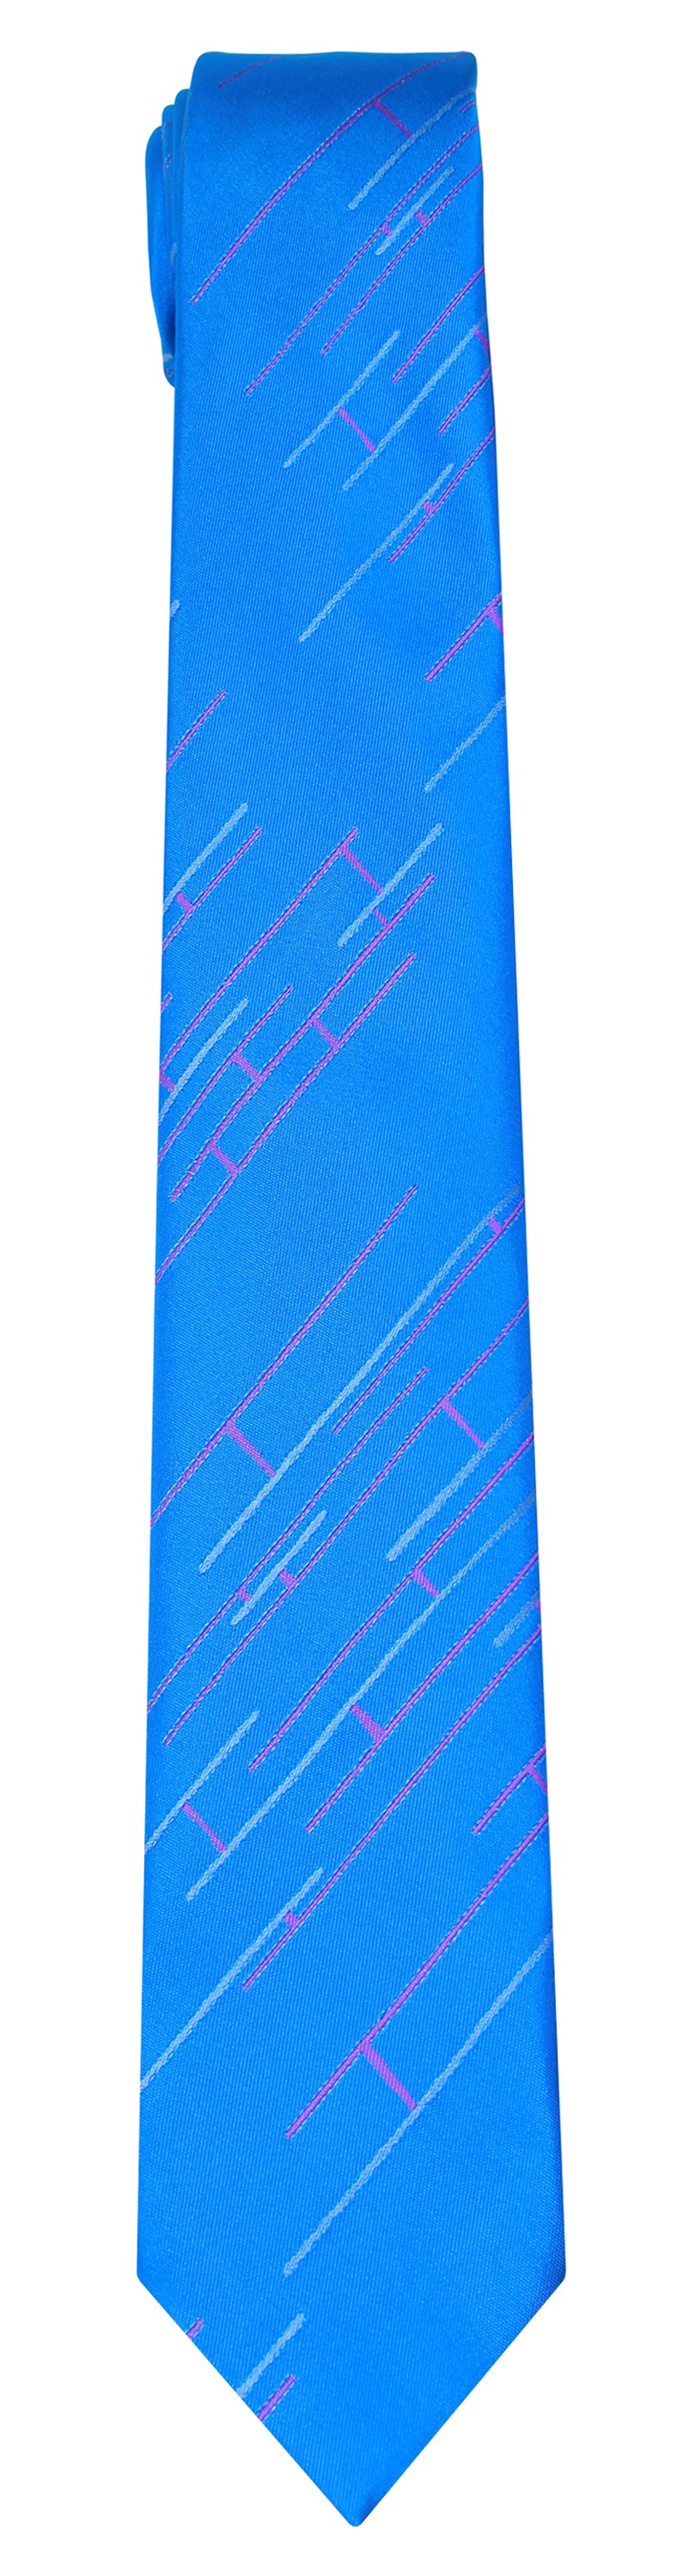 Mimi Fong Linked Tie in Blue